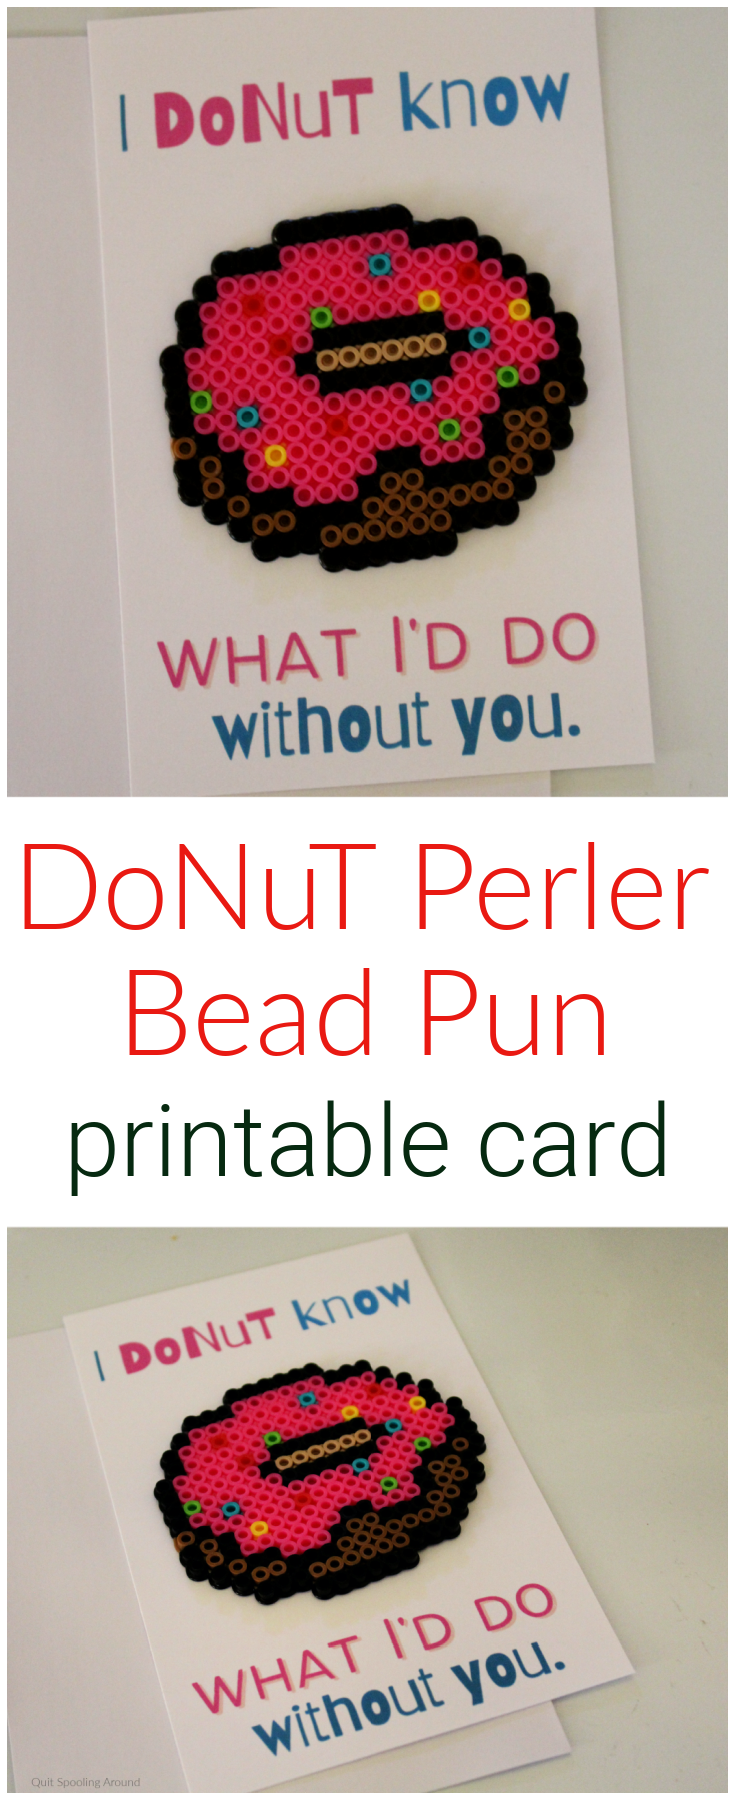 Donut Perler Bead Card